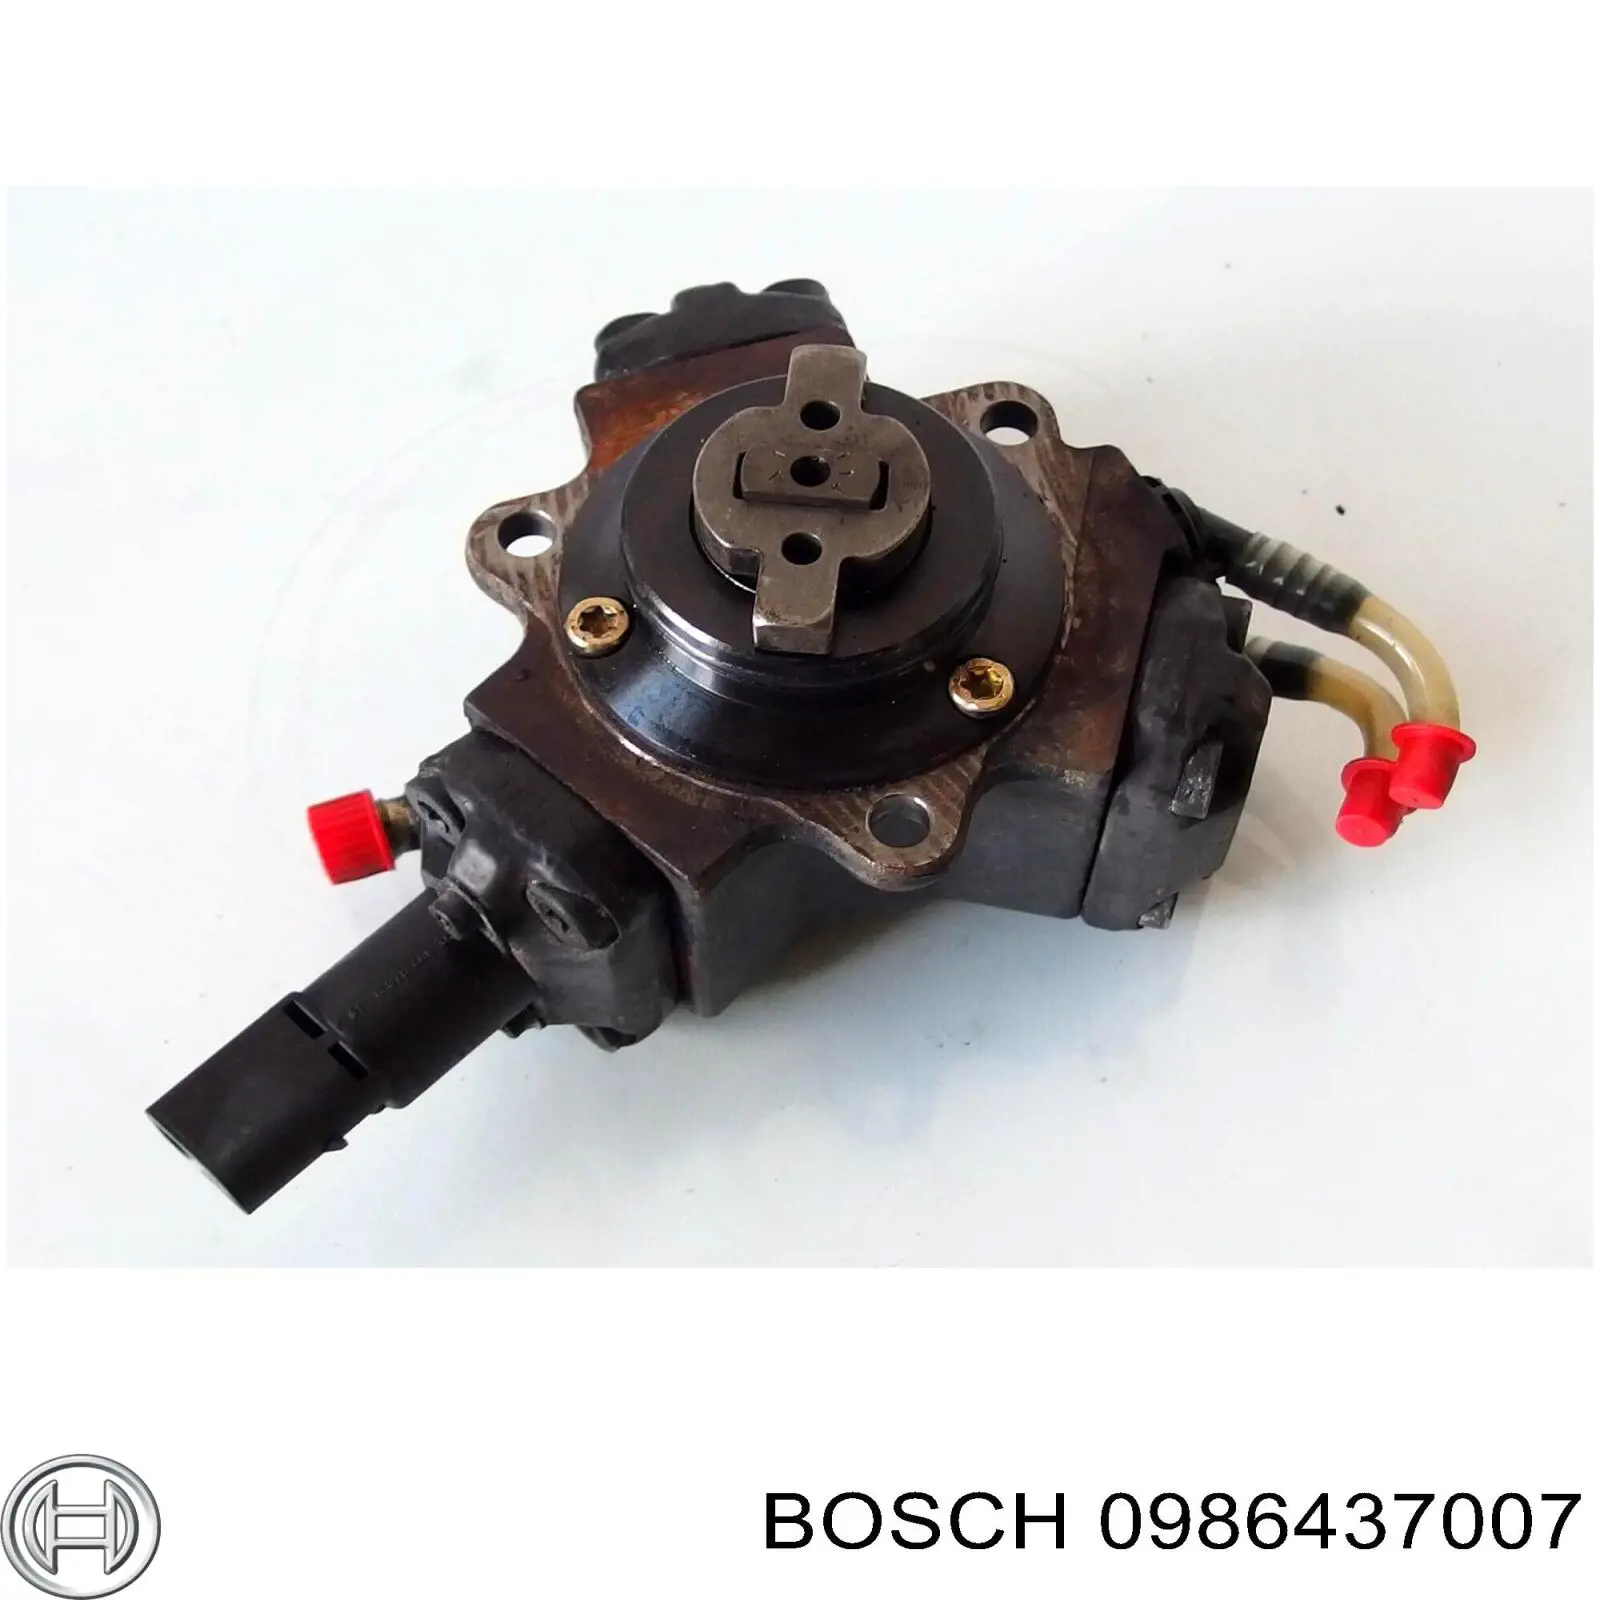 0986437007 Bosch bomba inyectora